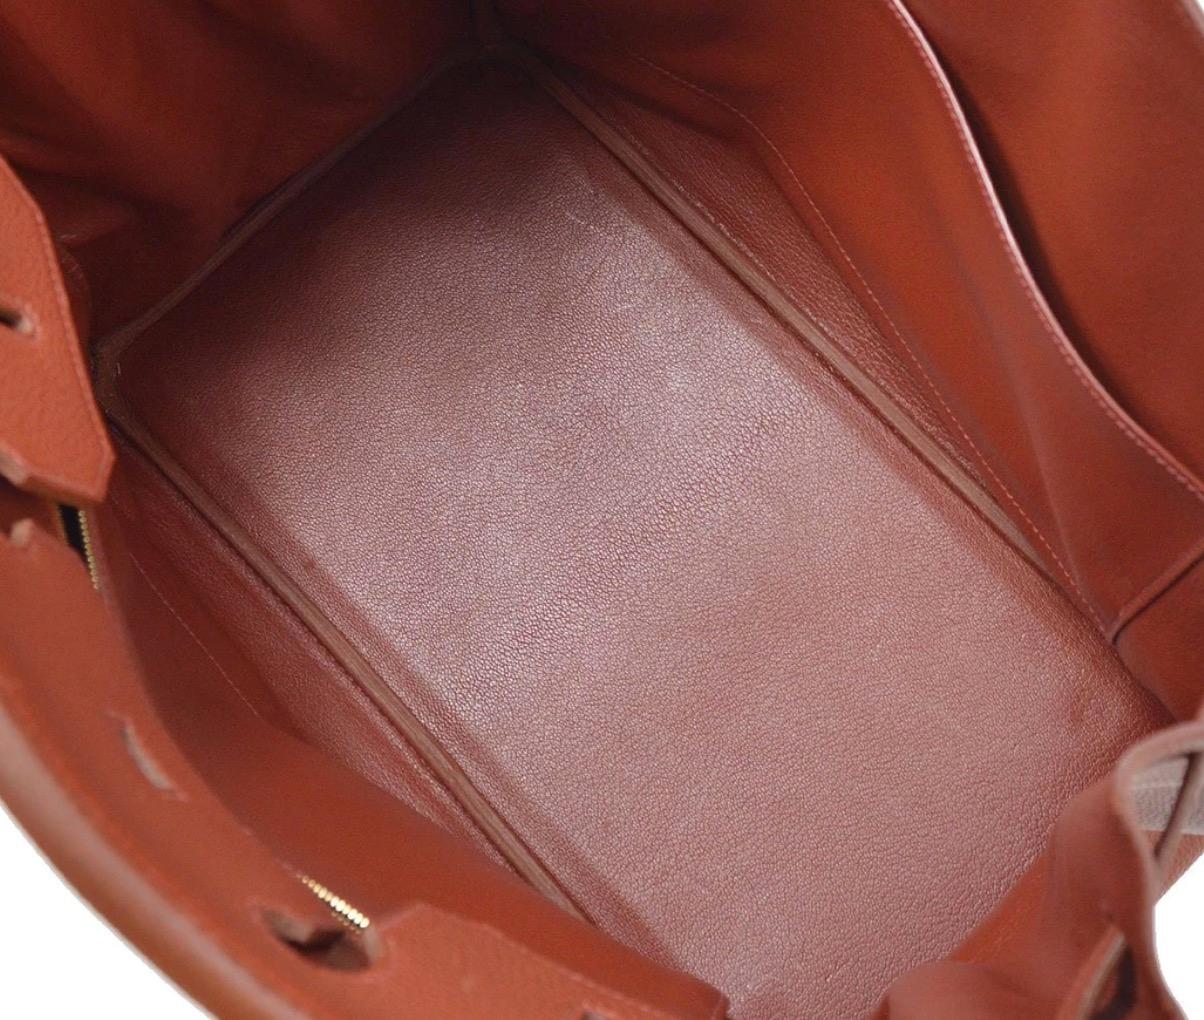 Brown Hermes Birkin 35 Brick Red Leather Gold Men's Women's Top Handle Tote Bag in Box